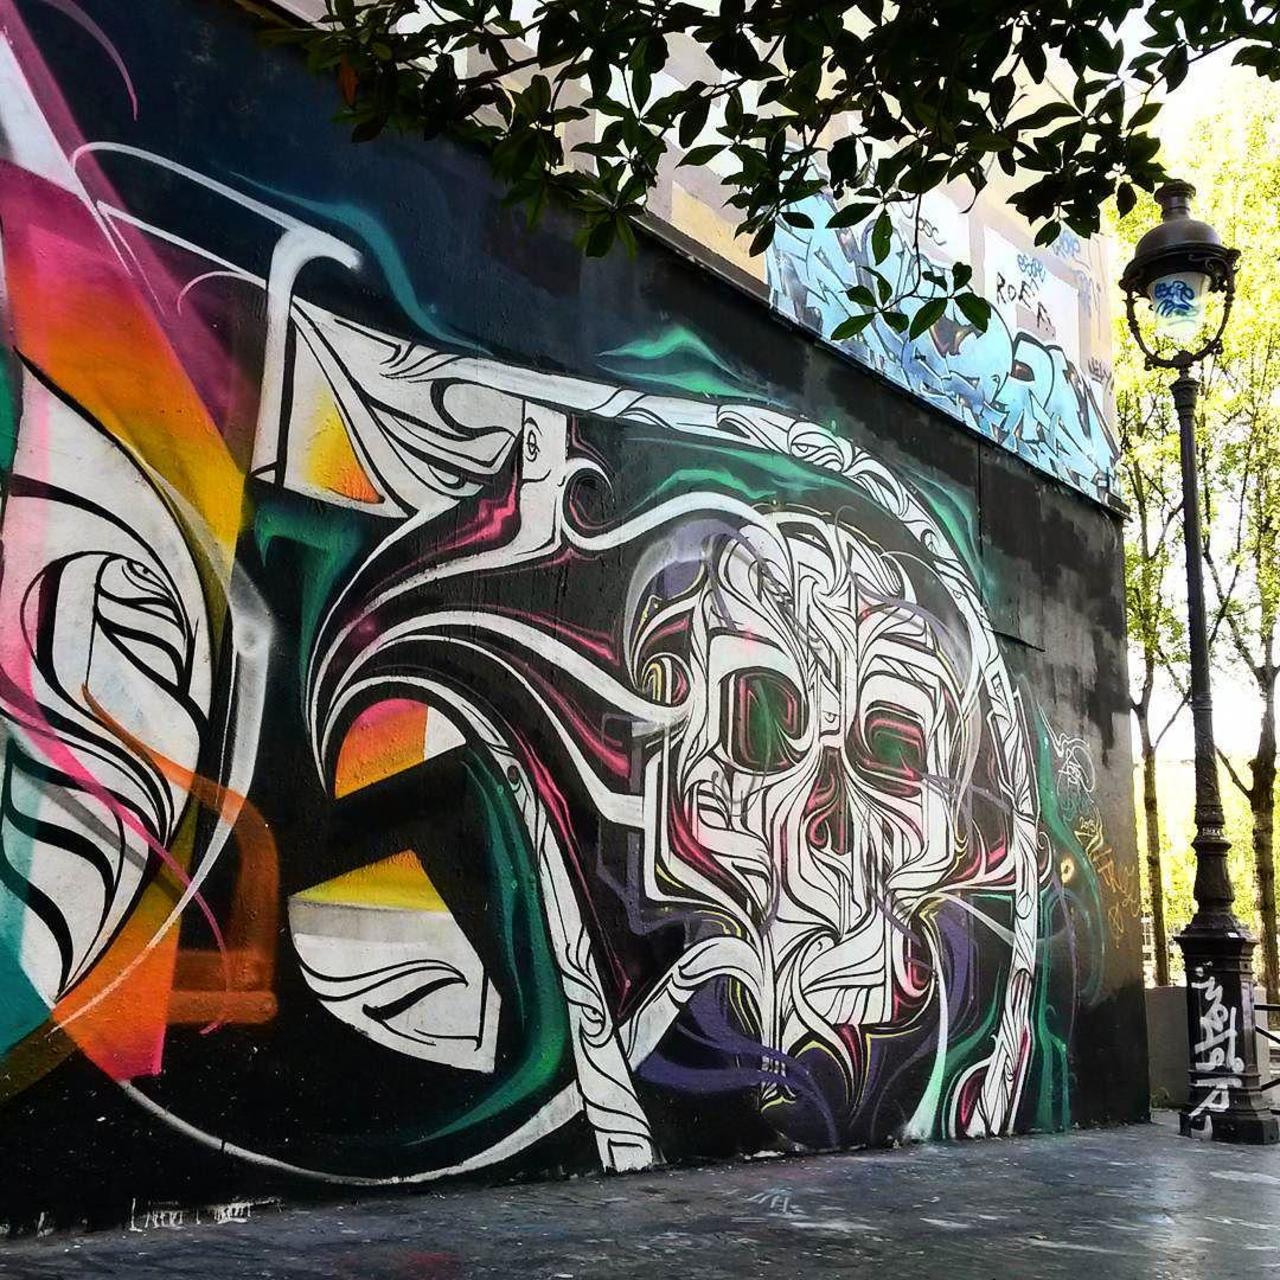 #Paris #graffiti photo by @namaste20 http://ift.tt/1P6t82I #StreetArt https://t.co/HeJzlABBRT